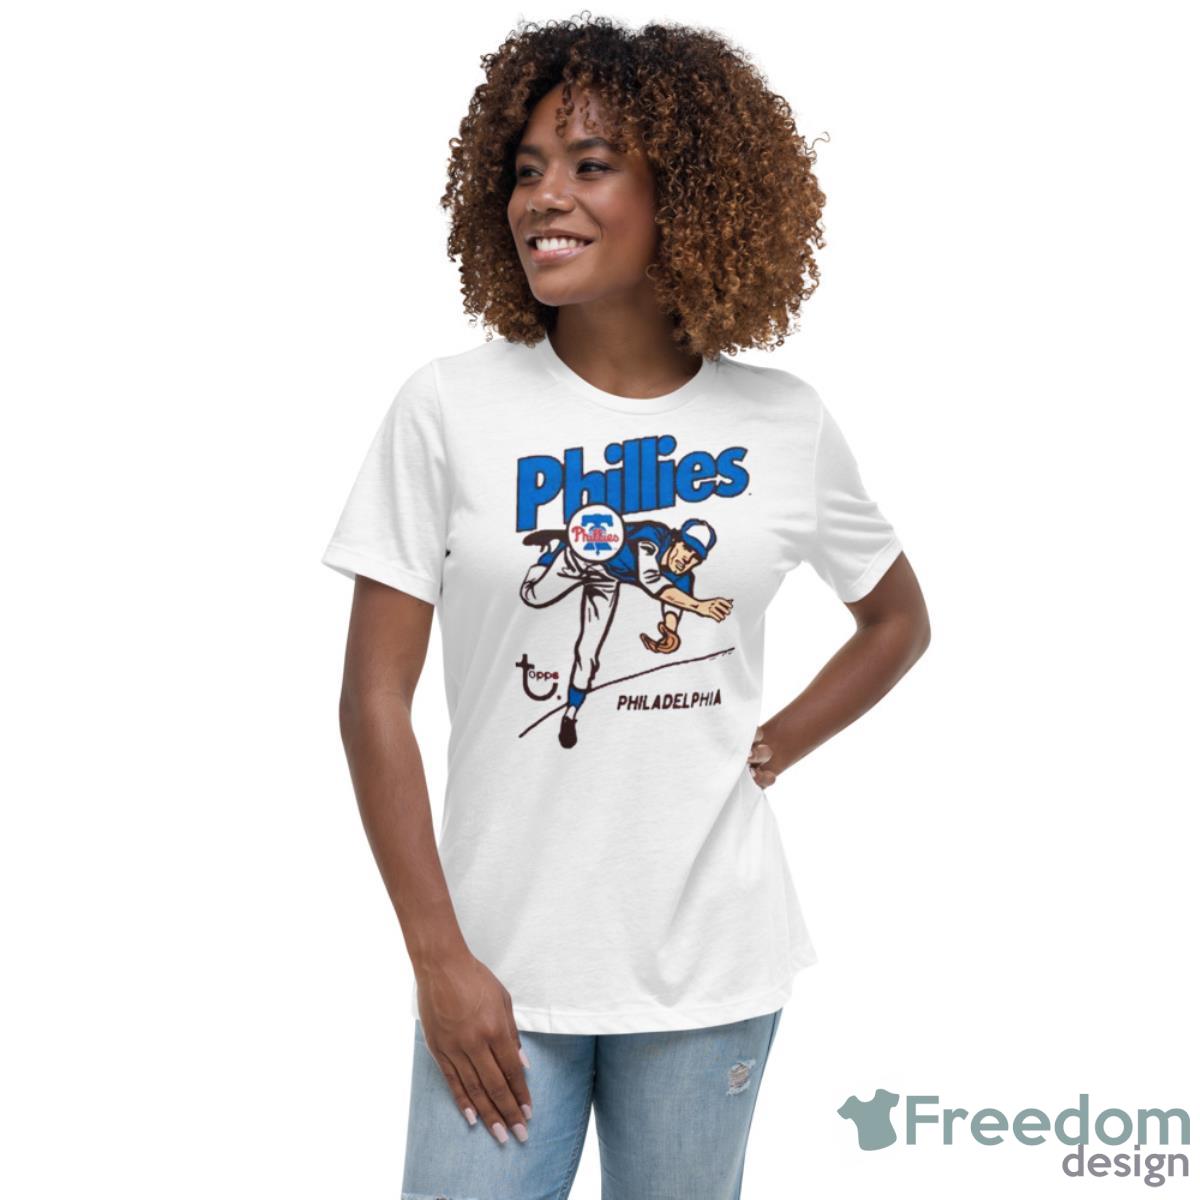 MLB X Topps Philadelphia Phillies Shirt - Freedomdesign